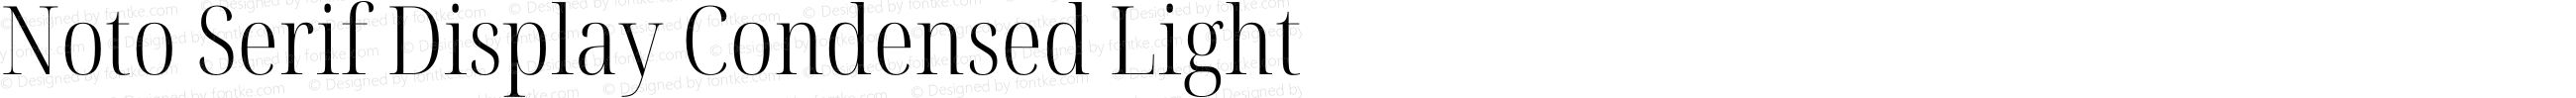 Noto Serif Display Condensed Light